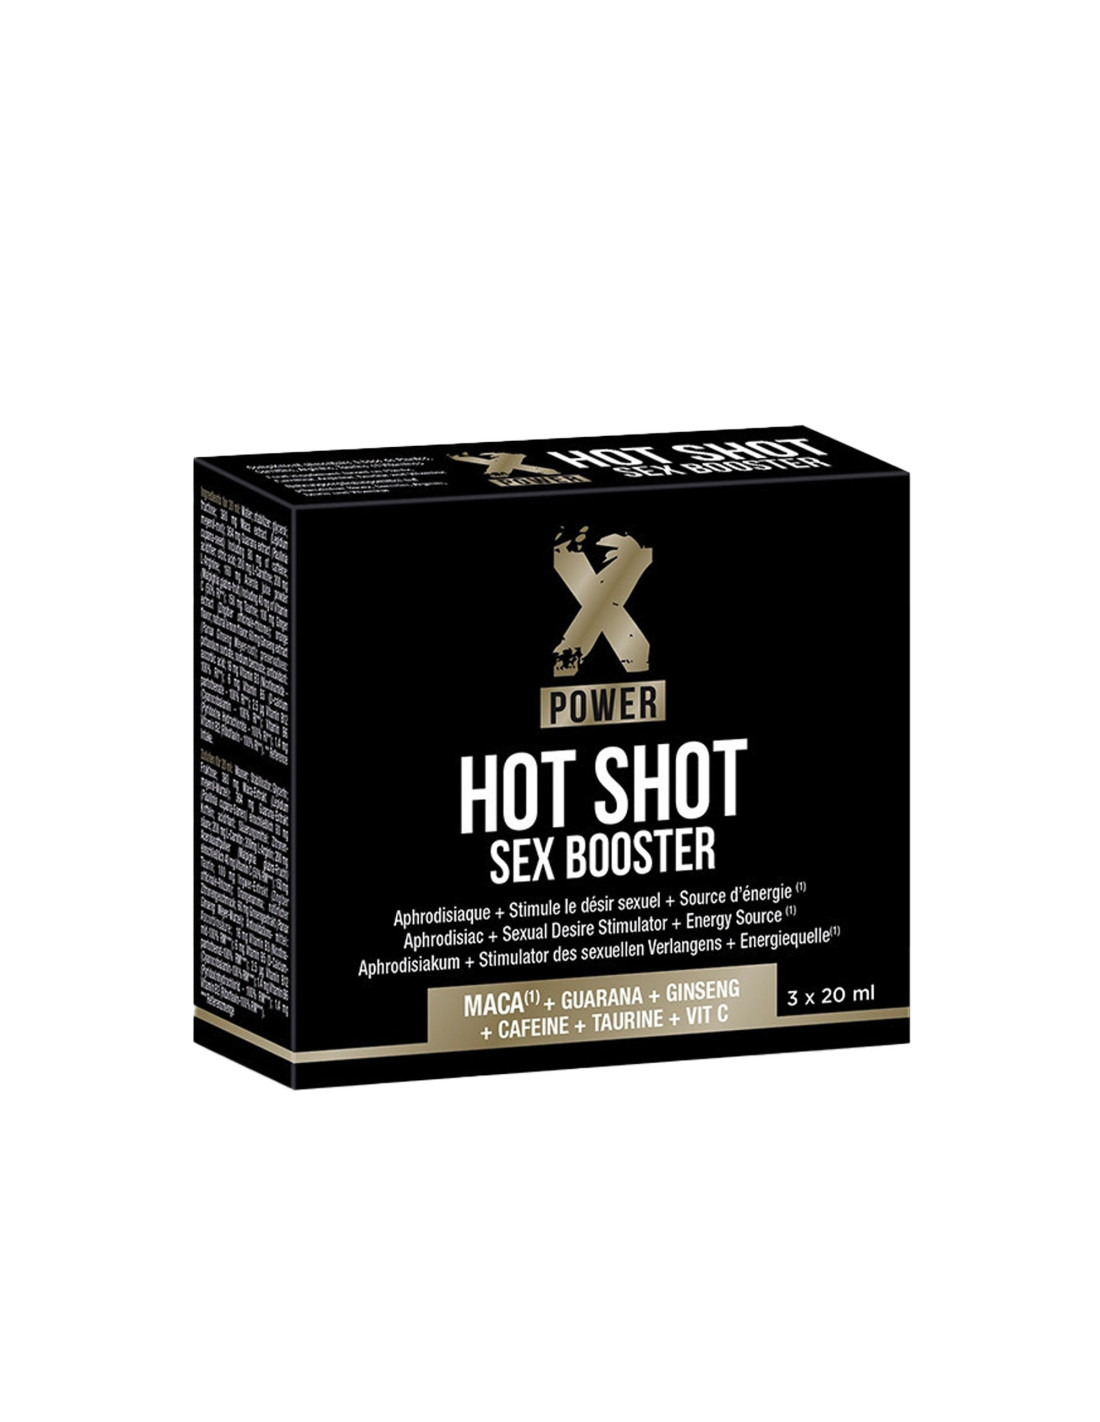 Labophyto Hot shot sex booster 3eDcJ58g